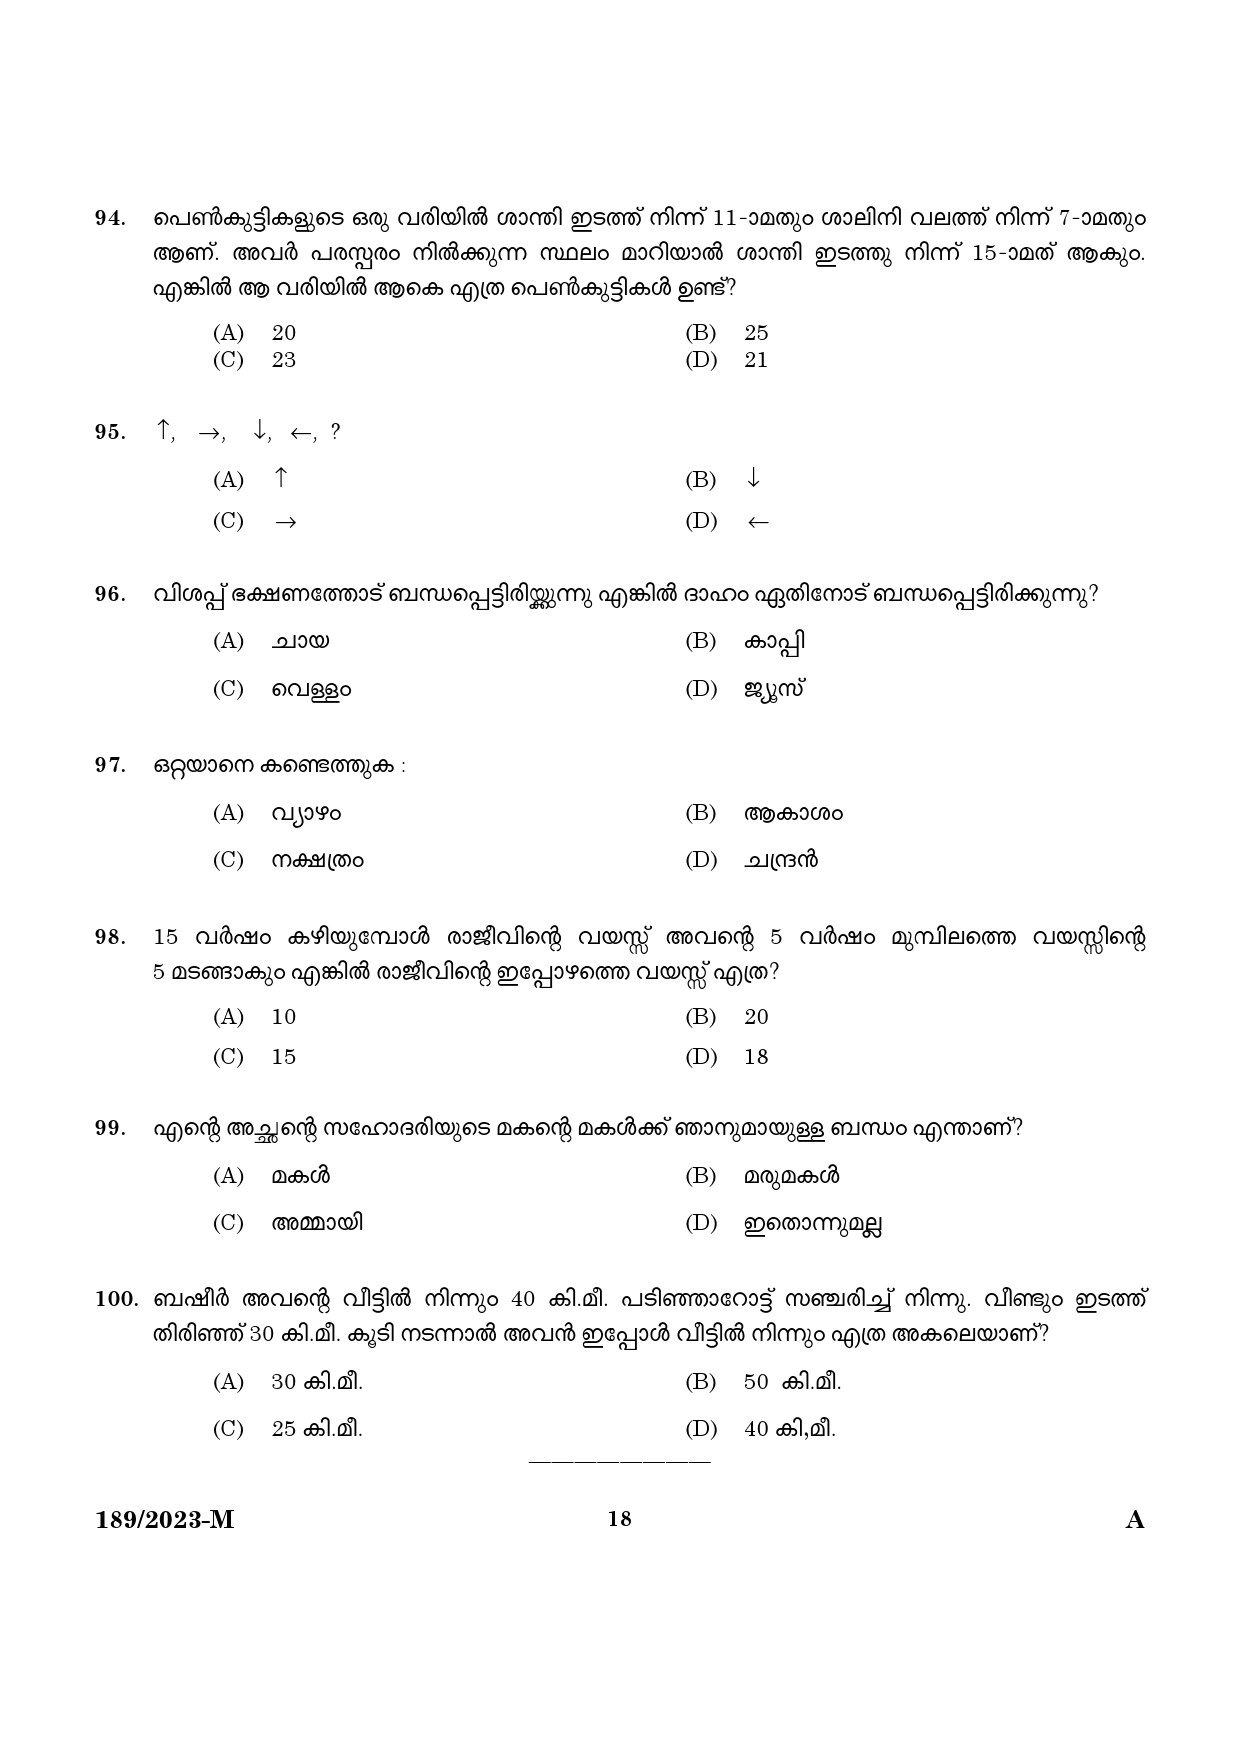 KPSC LGS Malayalam Exam 2023 Code 1892023 M 16